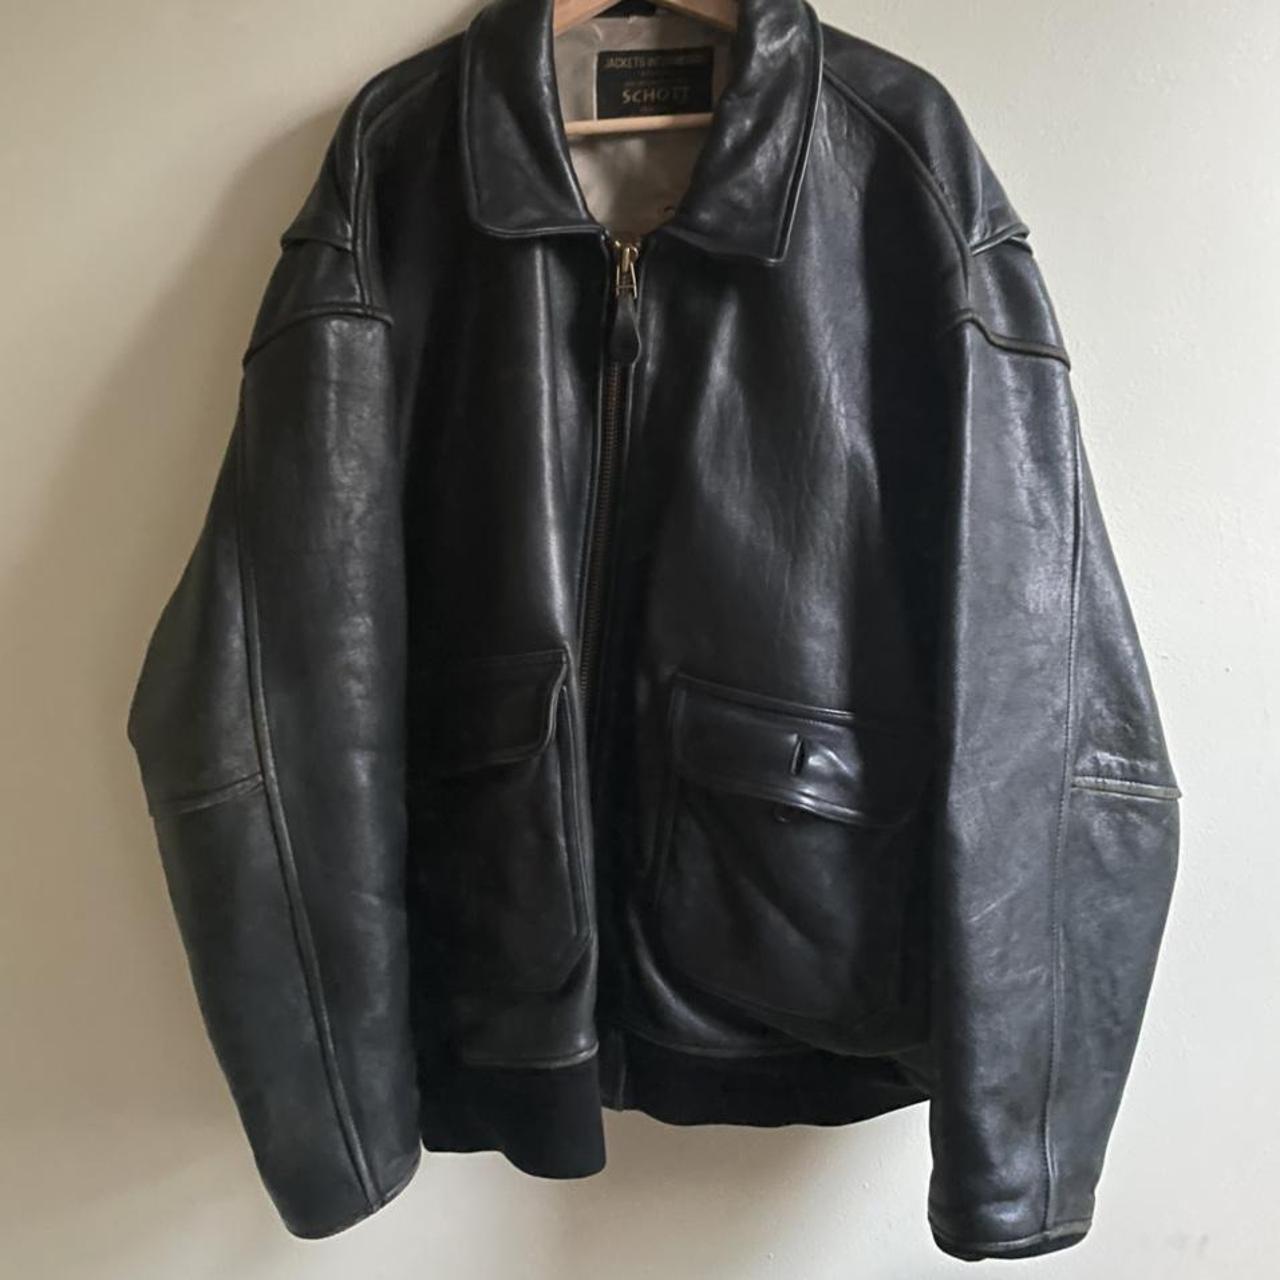 Excellent quality Schott leather flight jacket.... - Depop